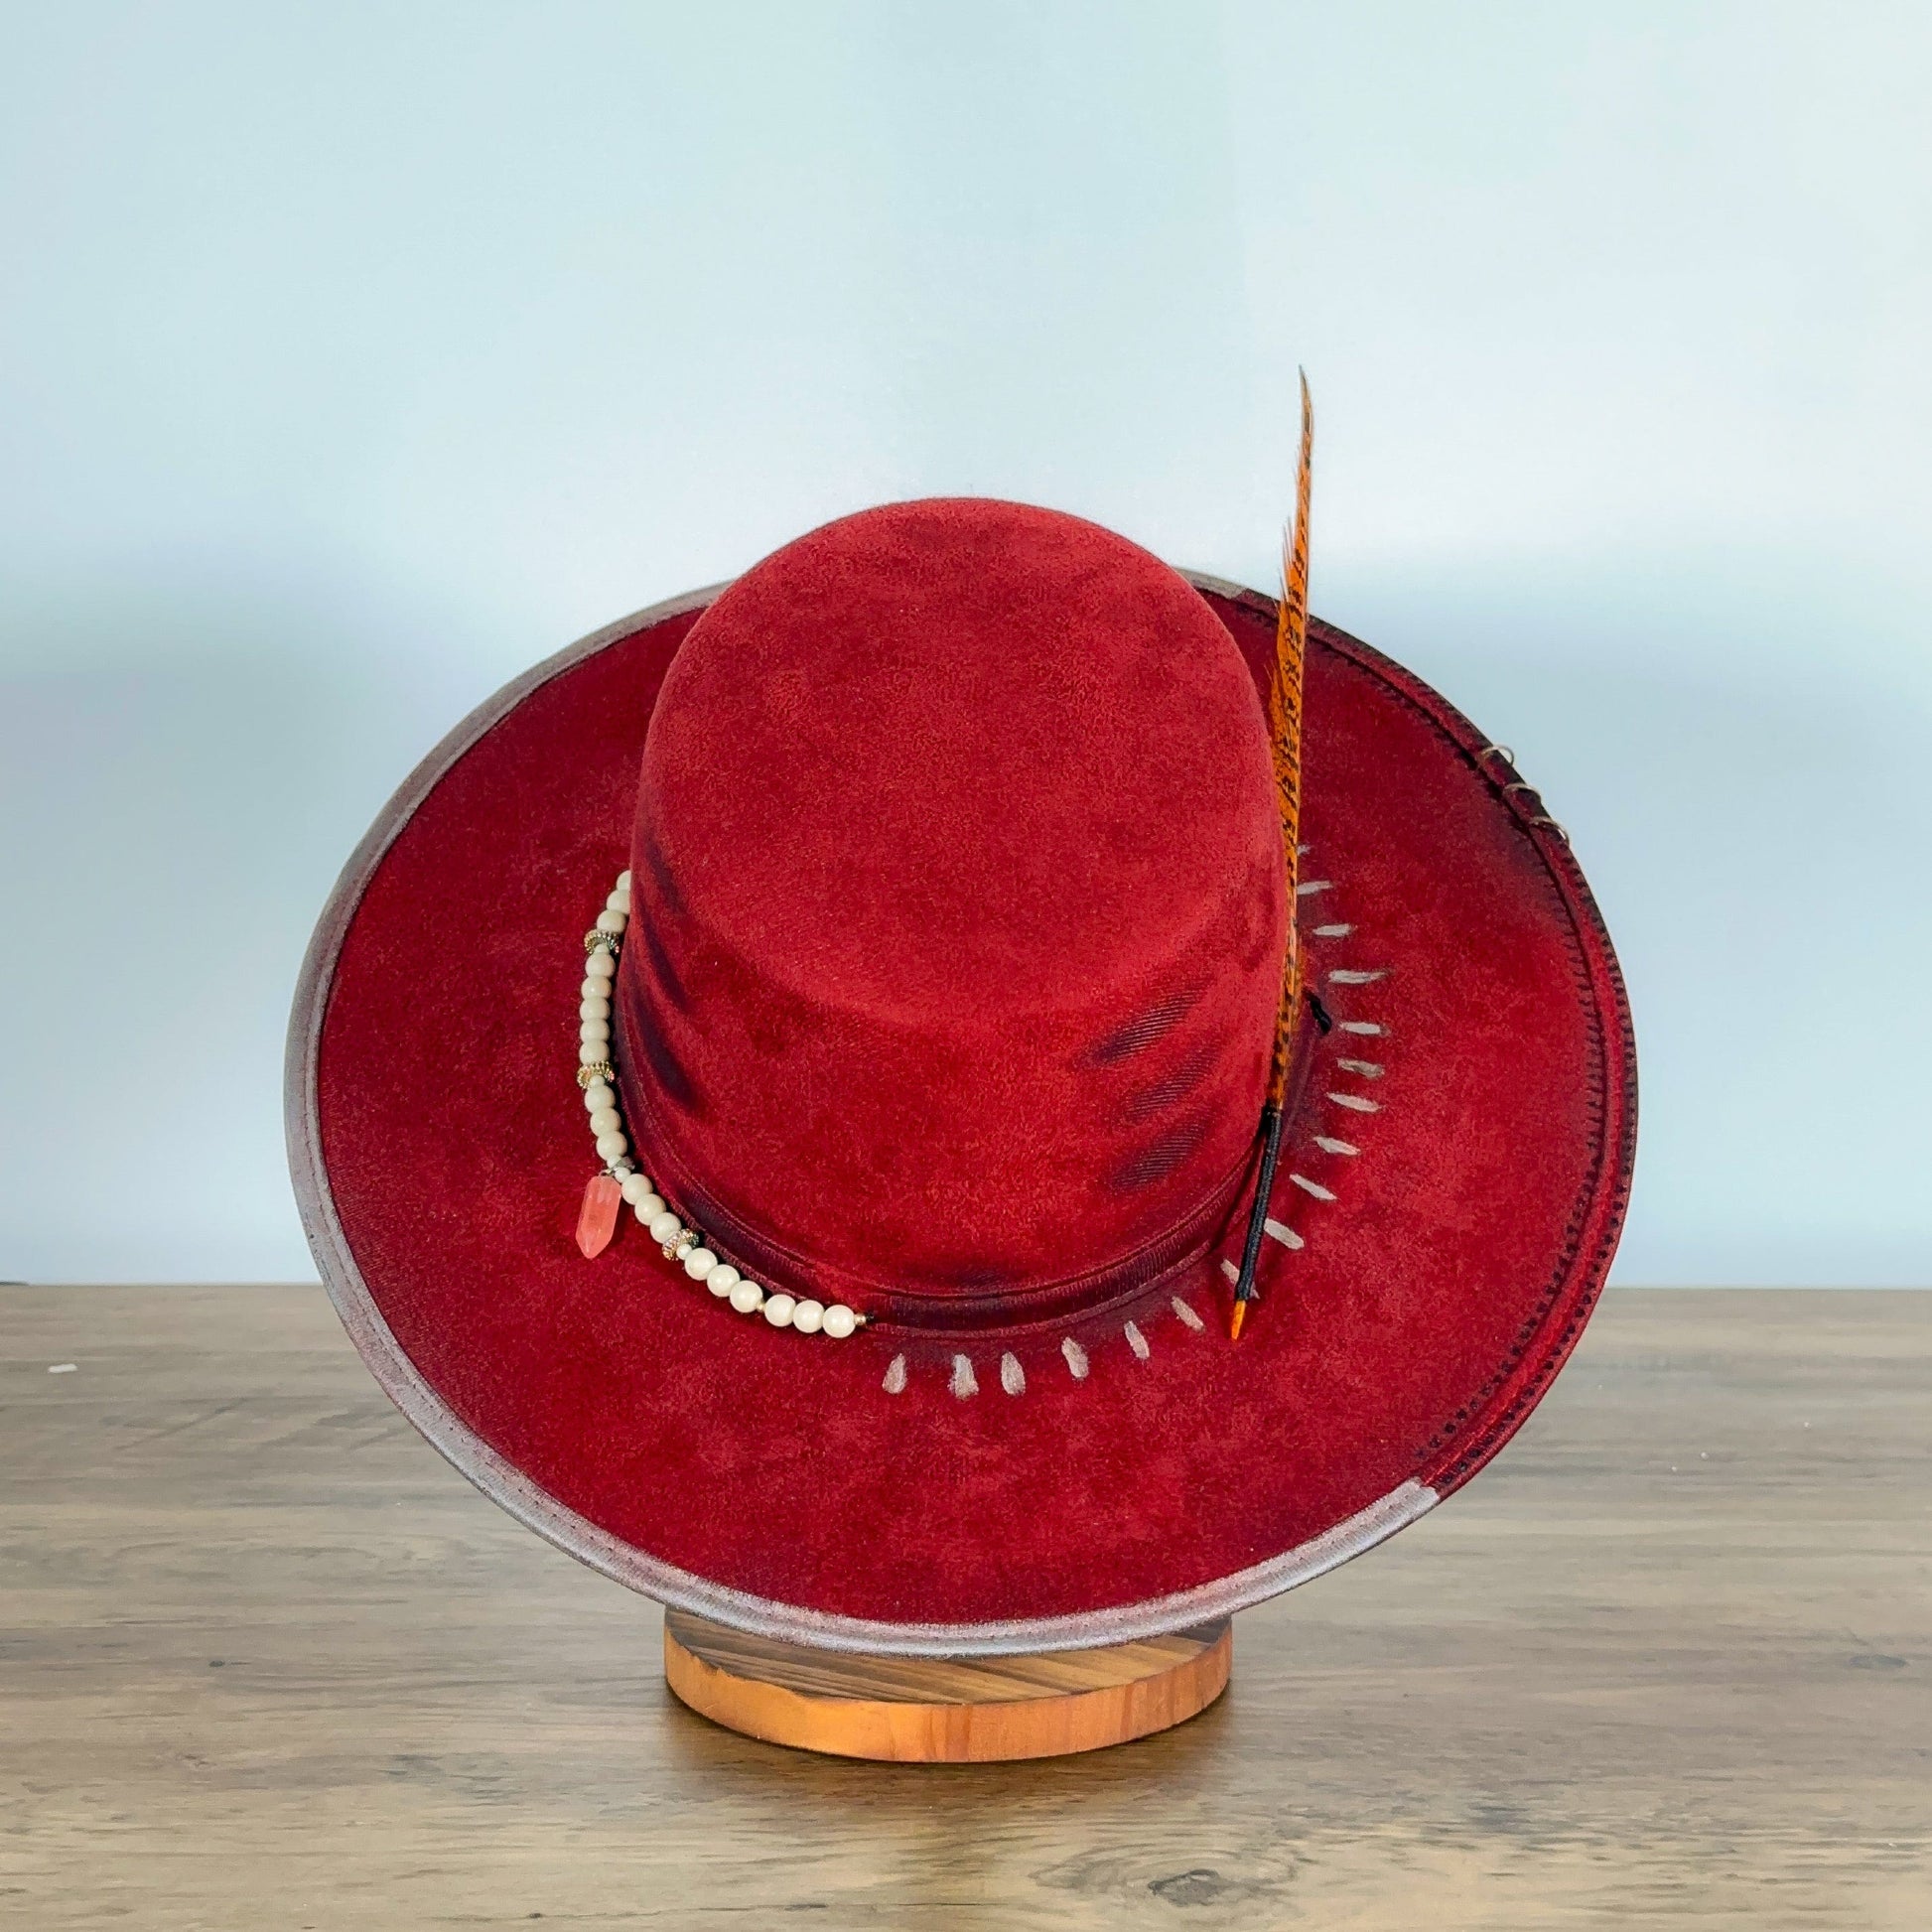 Aukala M Crimson Radiance Brim Hat - Red